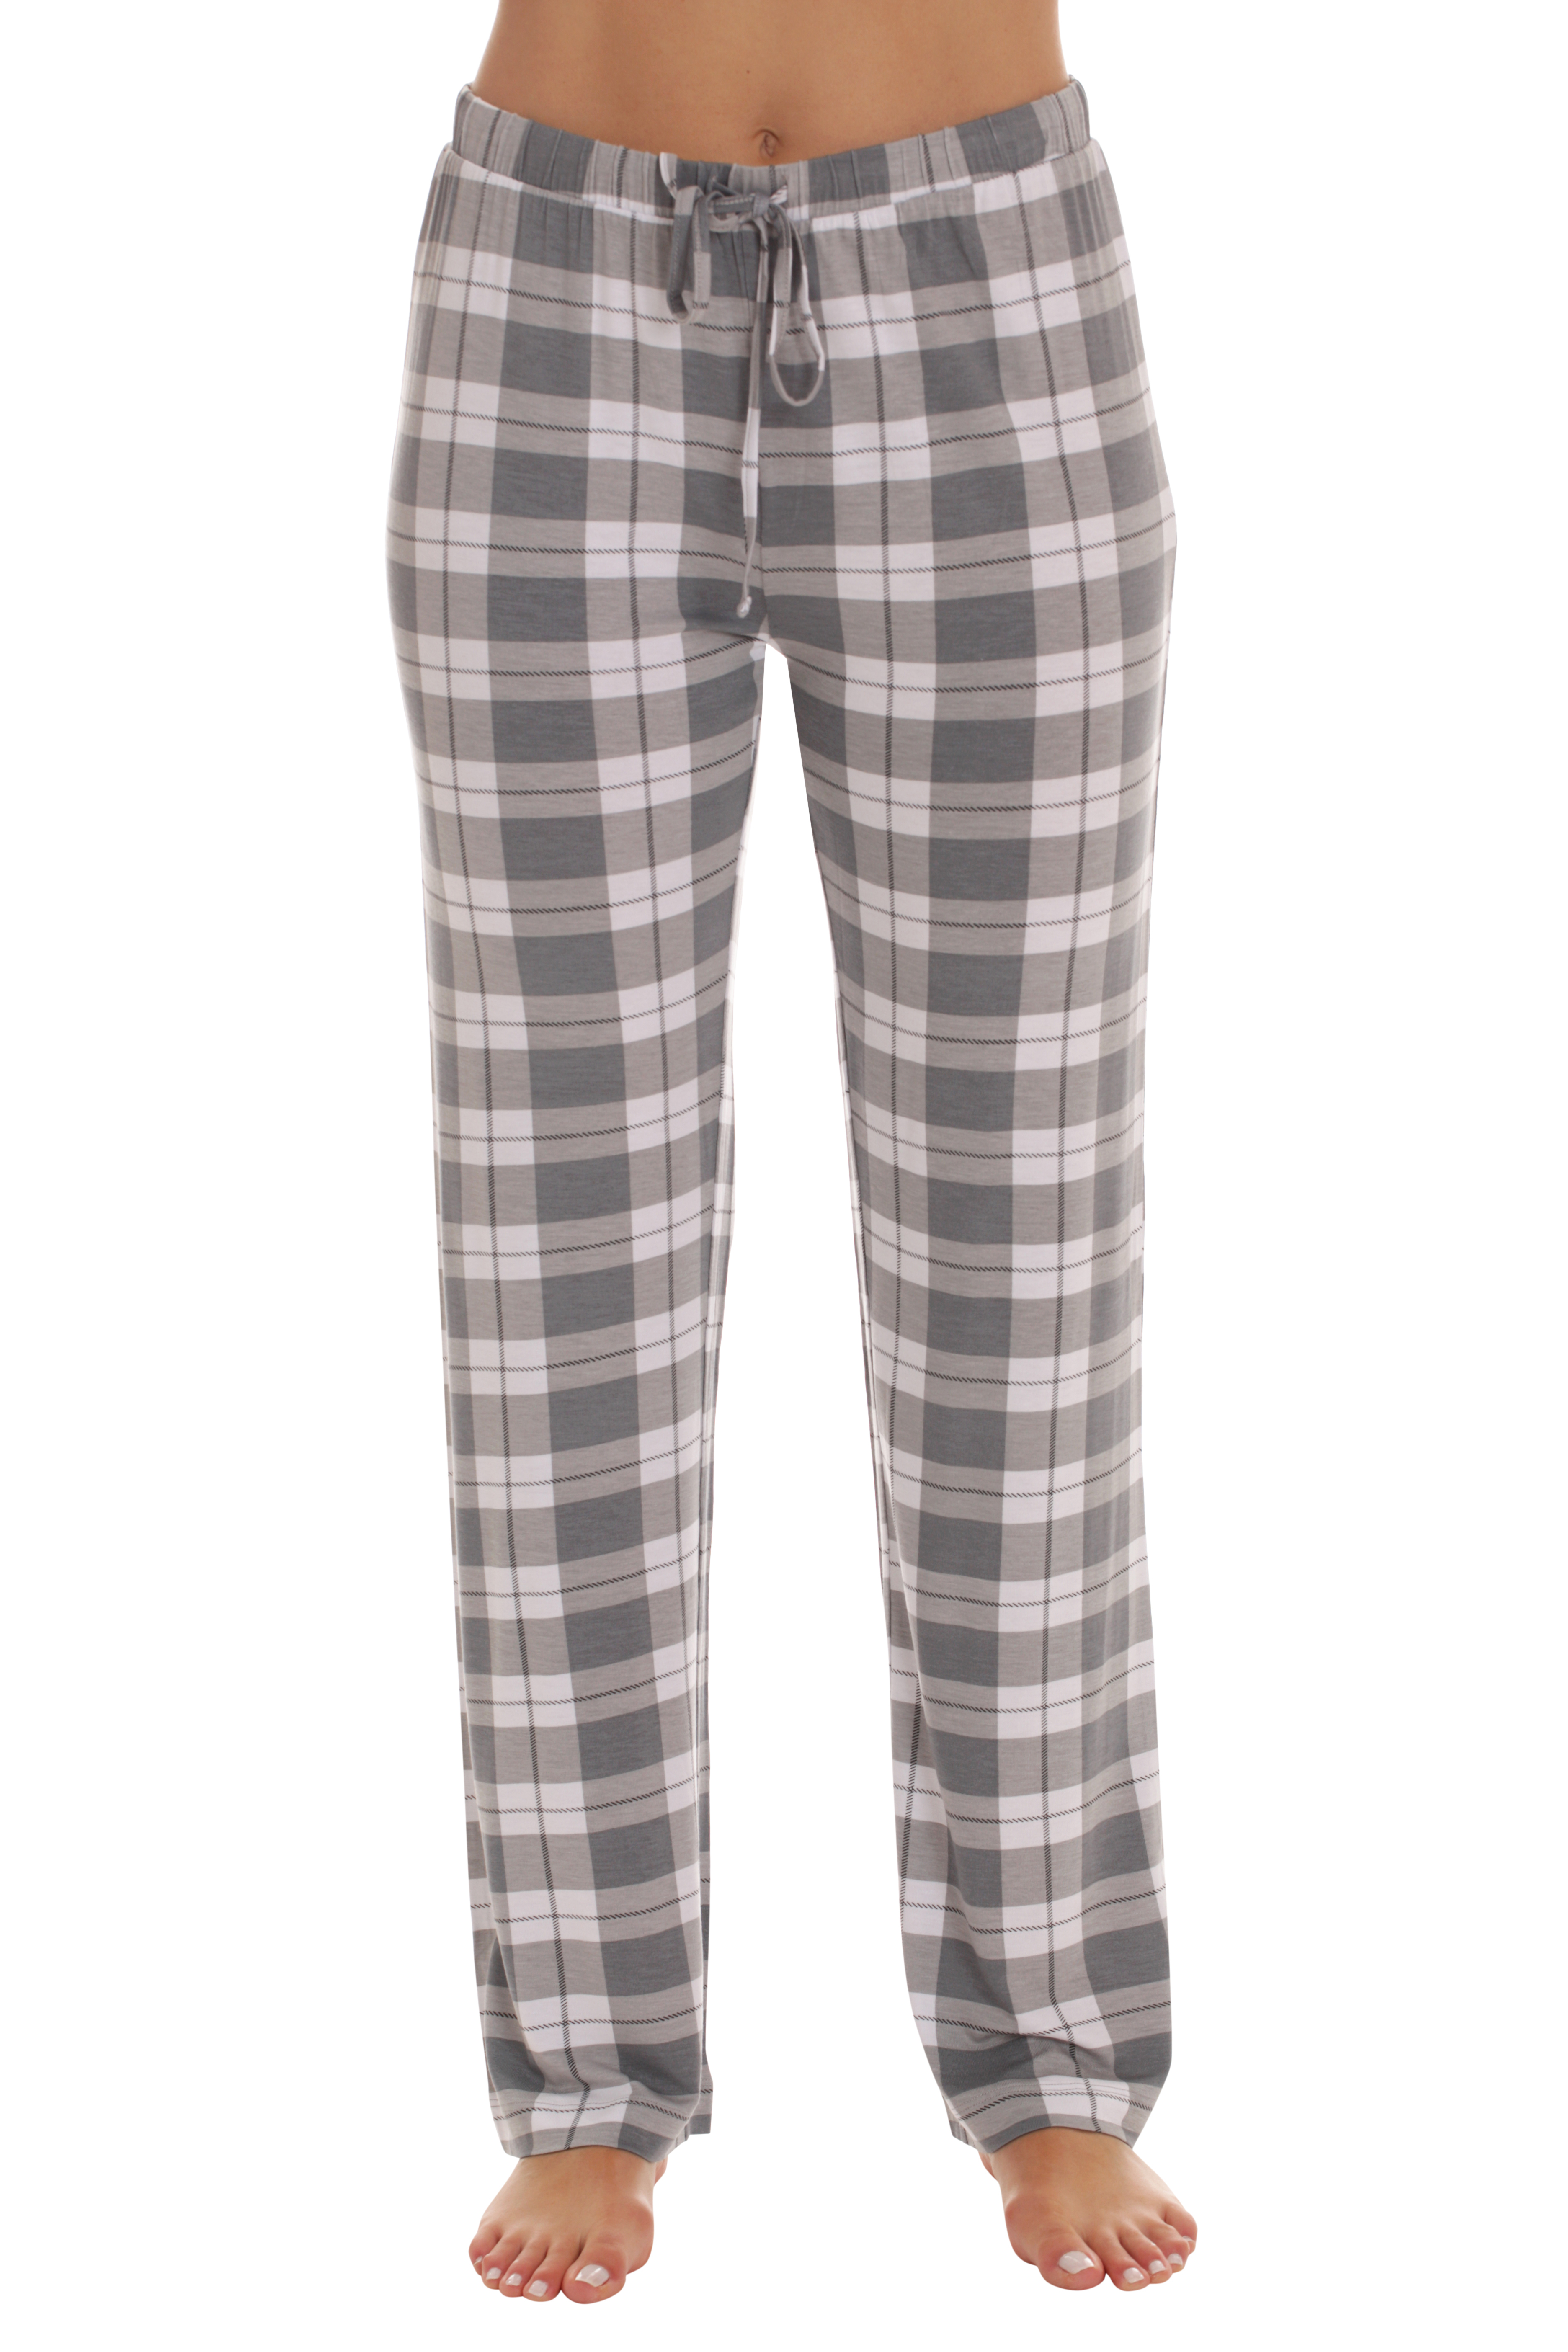 #followme Ultra Soft Printed Stretch Jersey Pajama Pants for Women | eBay